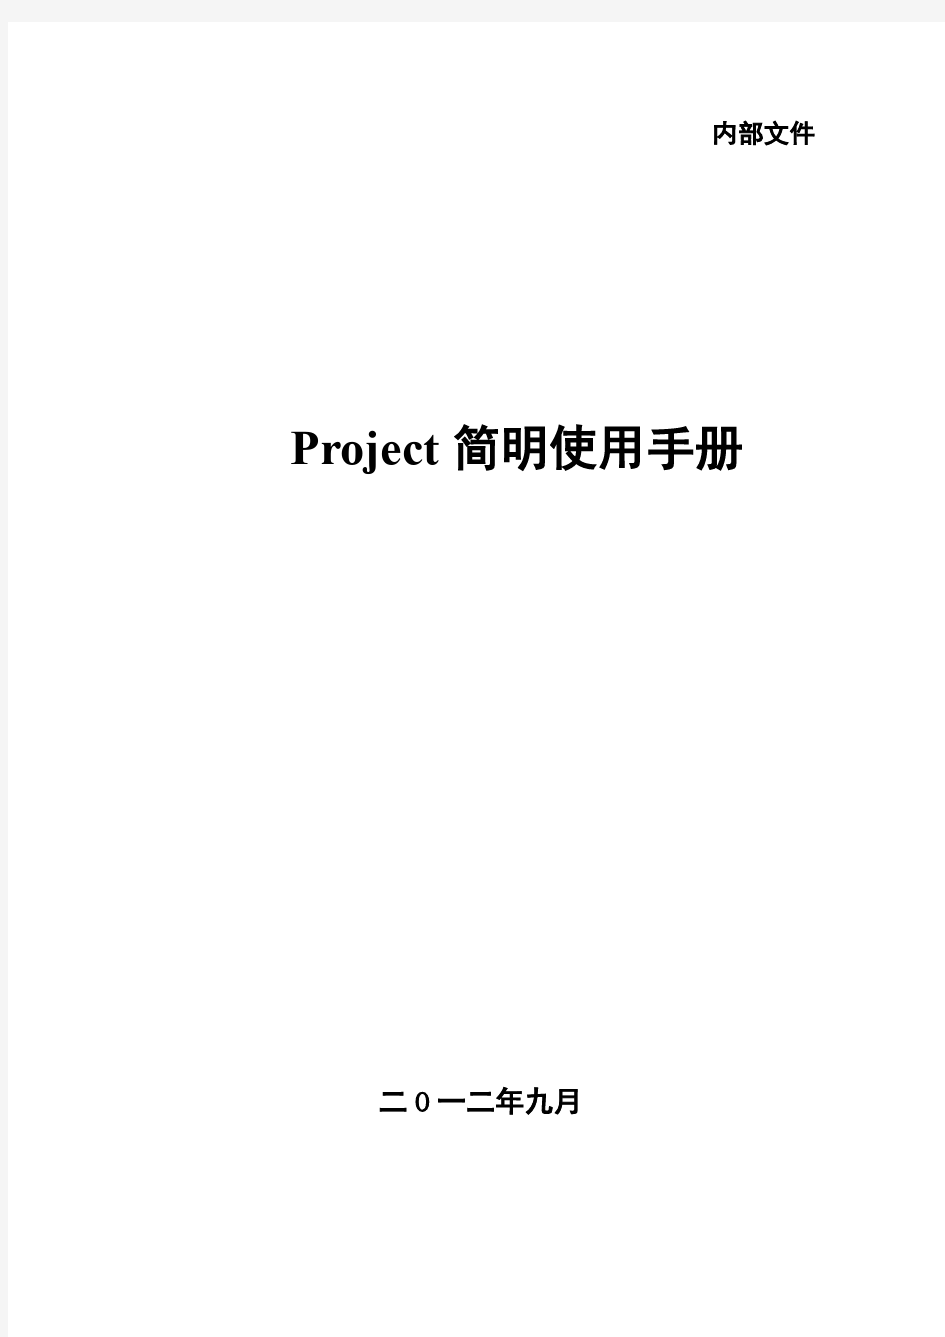 Project简明使用手册